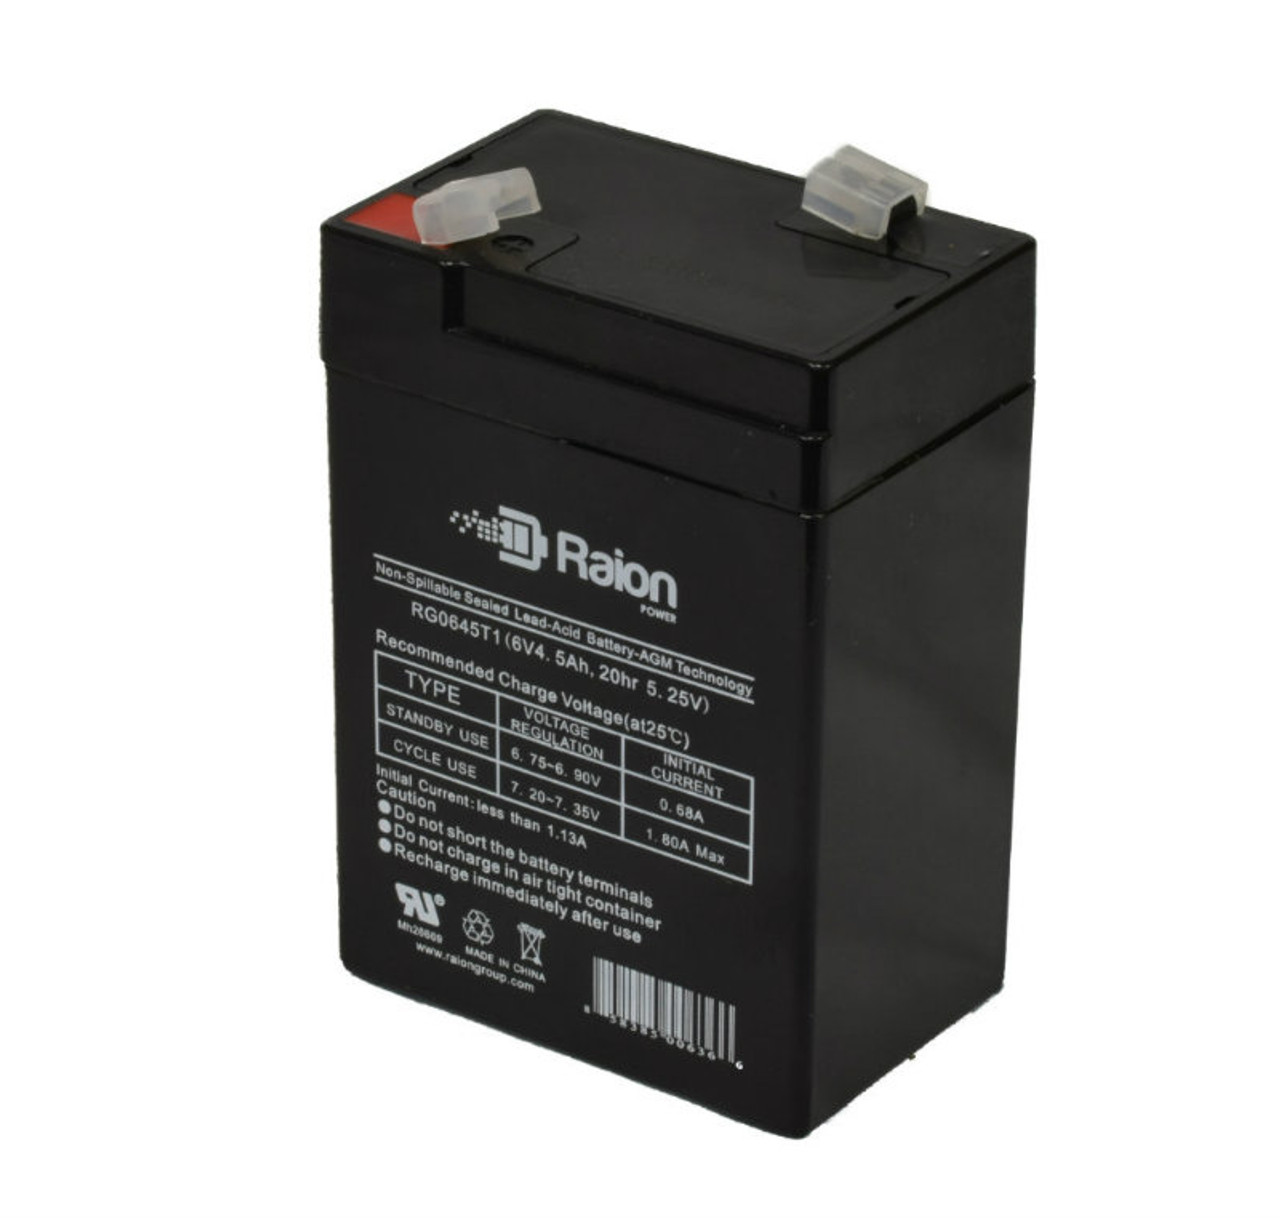 Raion Power RG0645T1 6V 4.5Ah Replacement Battery Cartridge for Emergi-Lite EM1